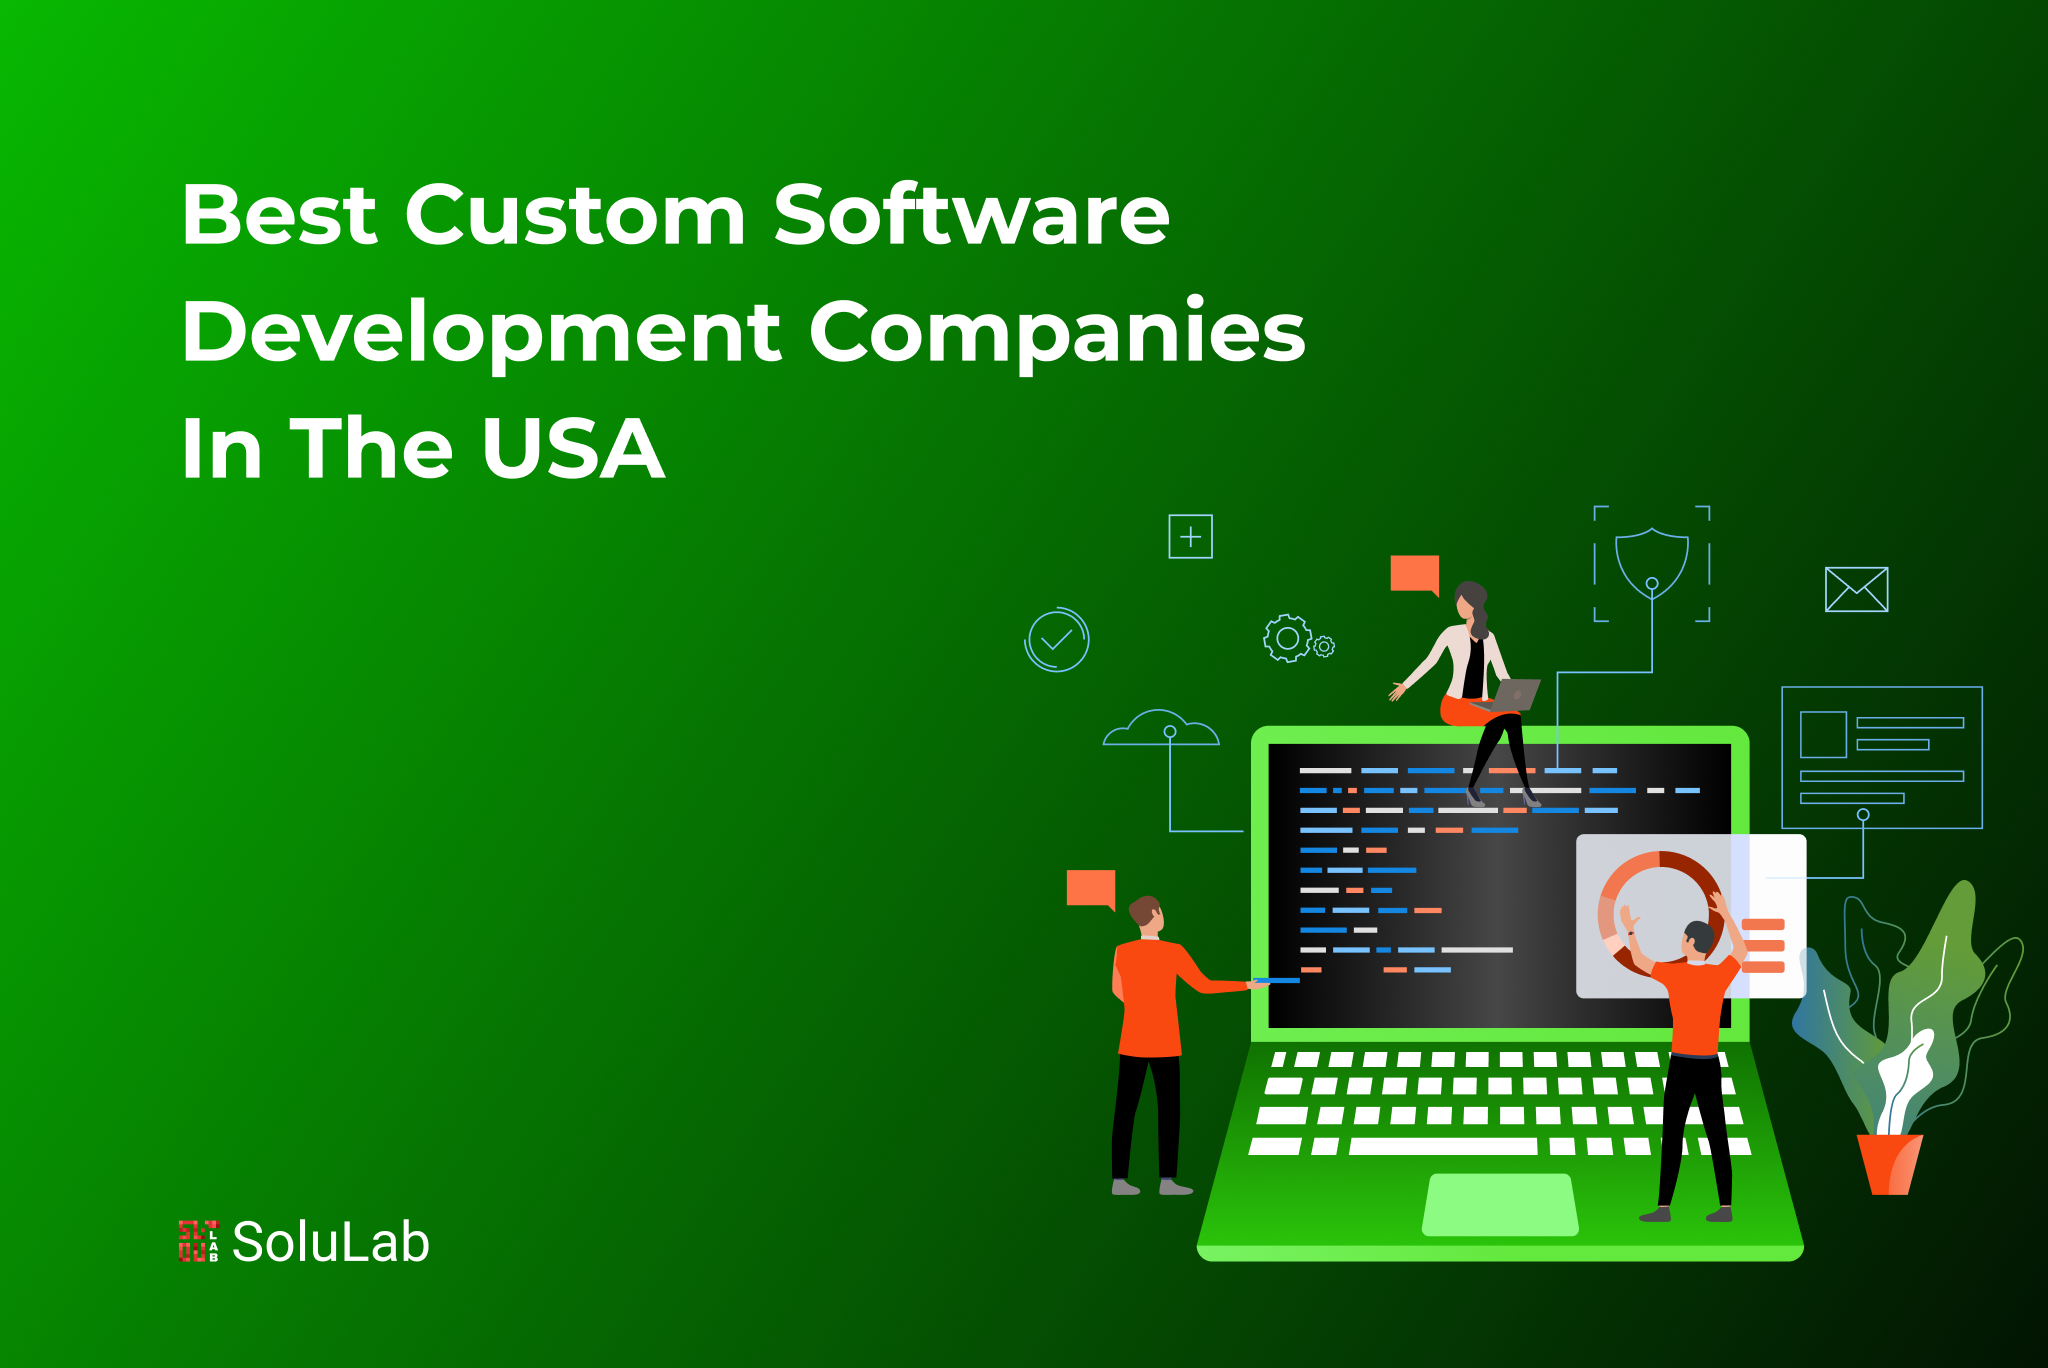 Best Custom Software Development Companies in the USA